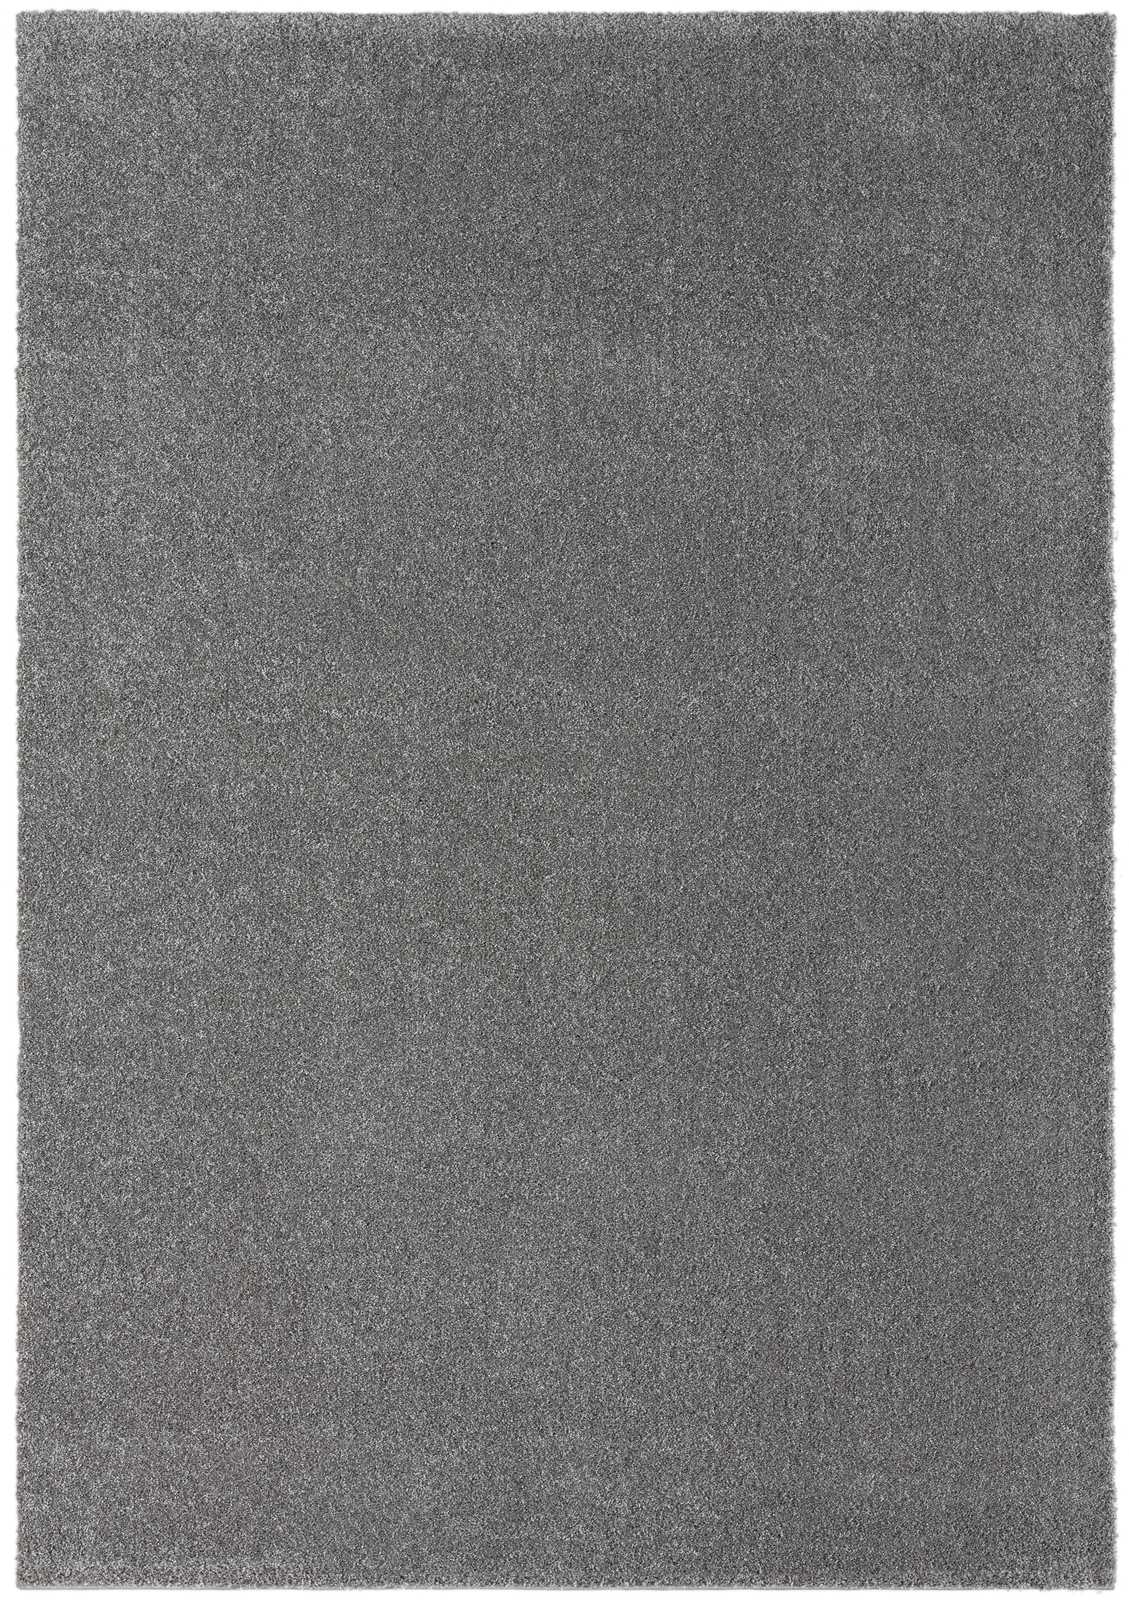             Fluffy short pile carpet in grey - 110 x 60 cm
        